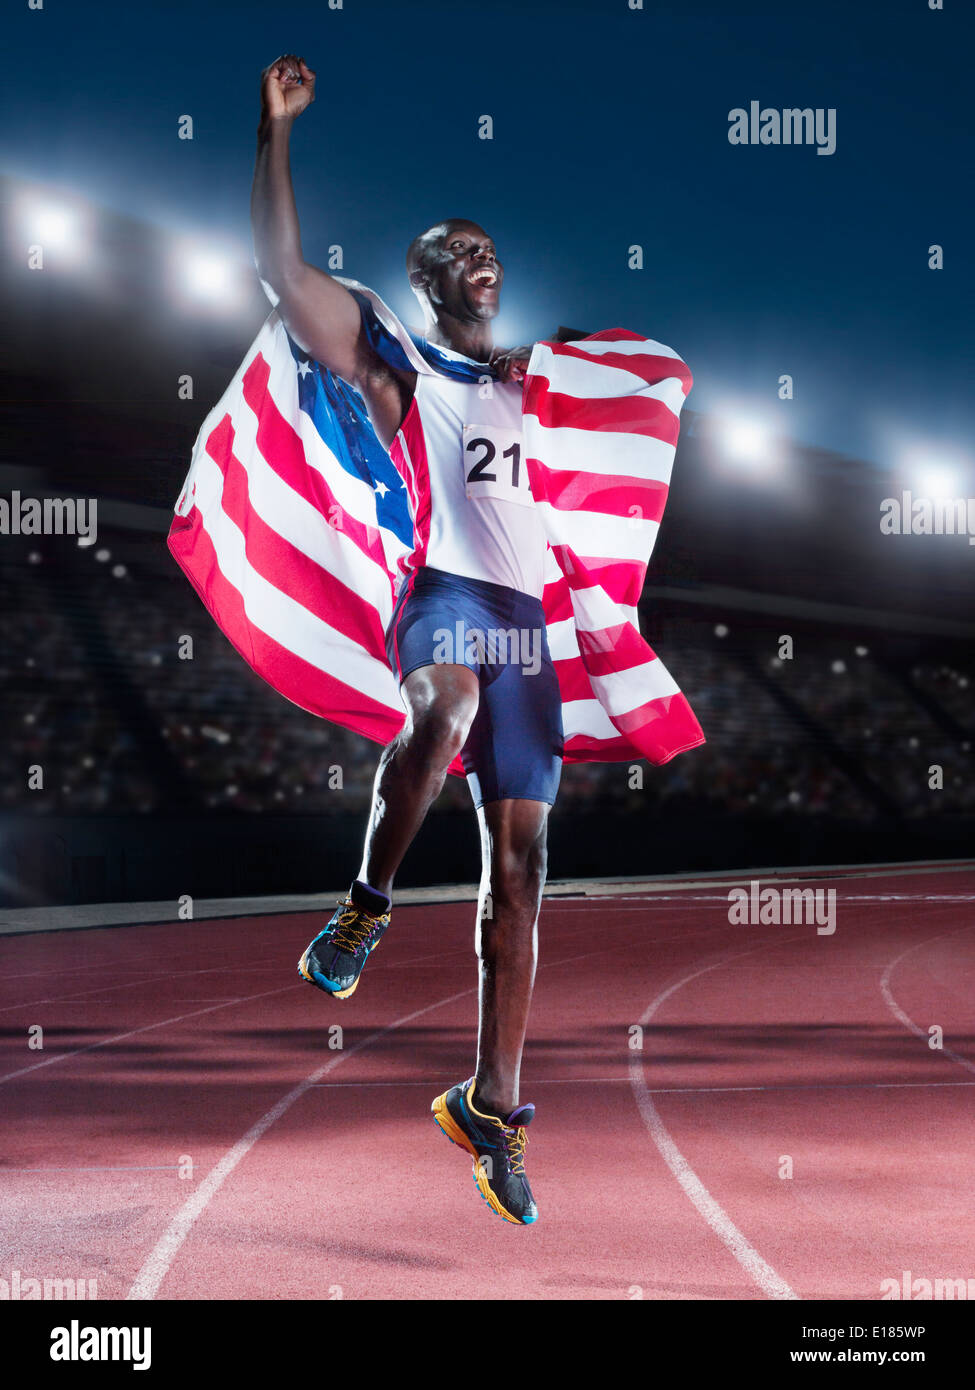 Runner holding American flag and celebrating on track Stock Photo